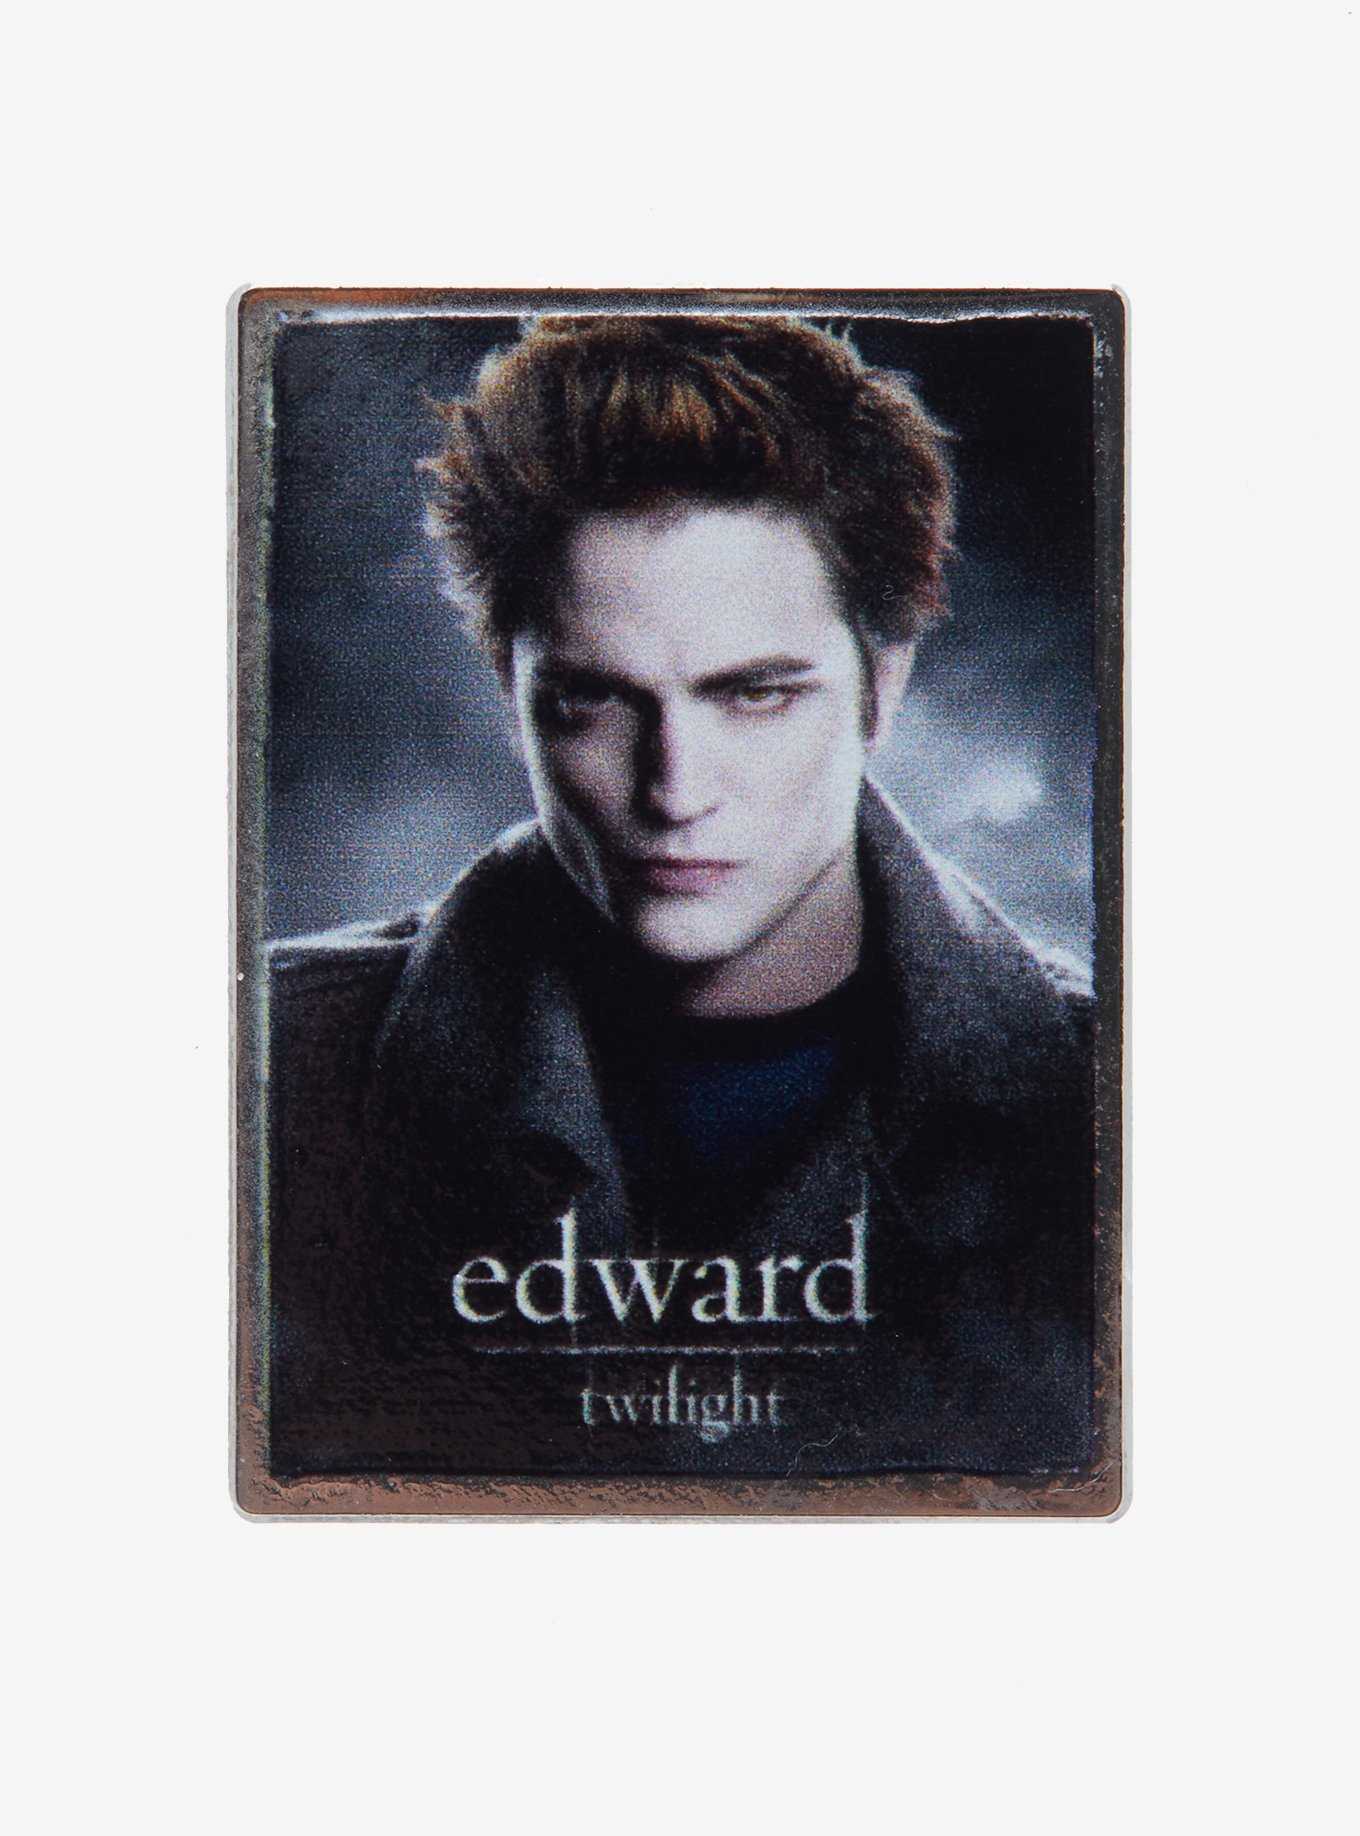 The Twilight Saga Edward Poster Enamel Pin - BoxLunch Exclusive, , hi-res